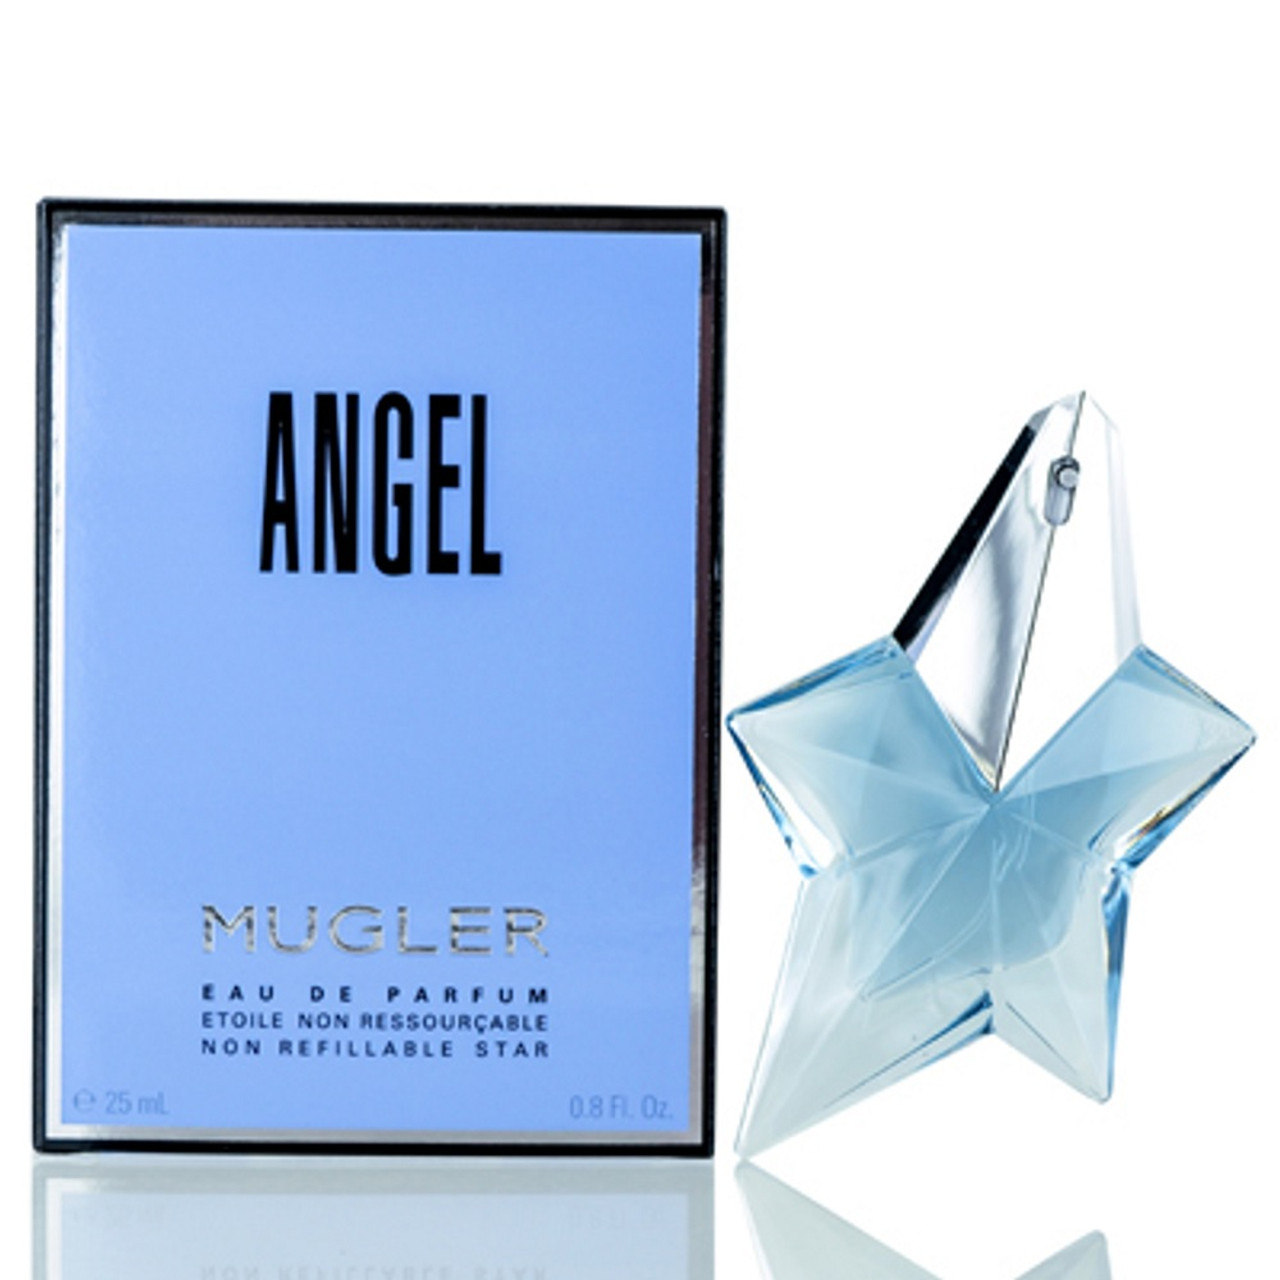 Angel by Thierry Mugler Eau de Parfum Spray Refillable .